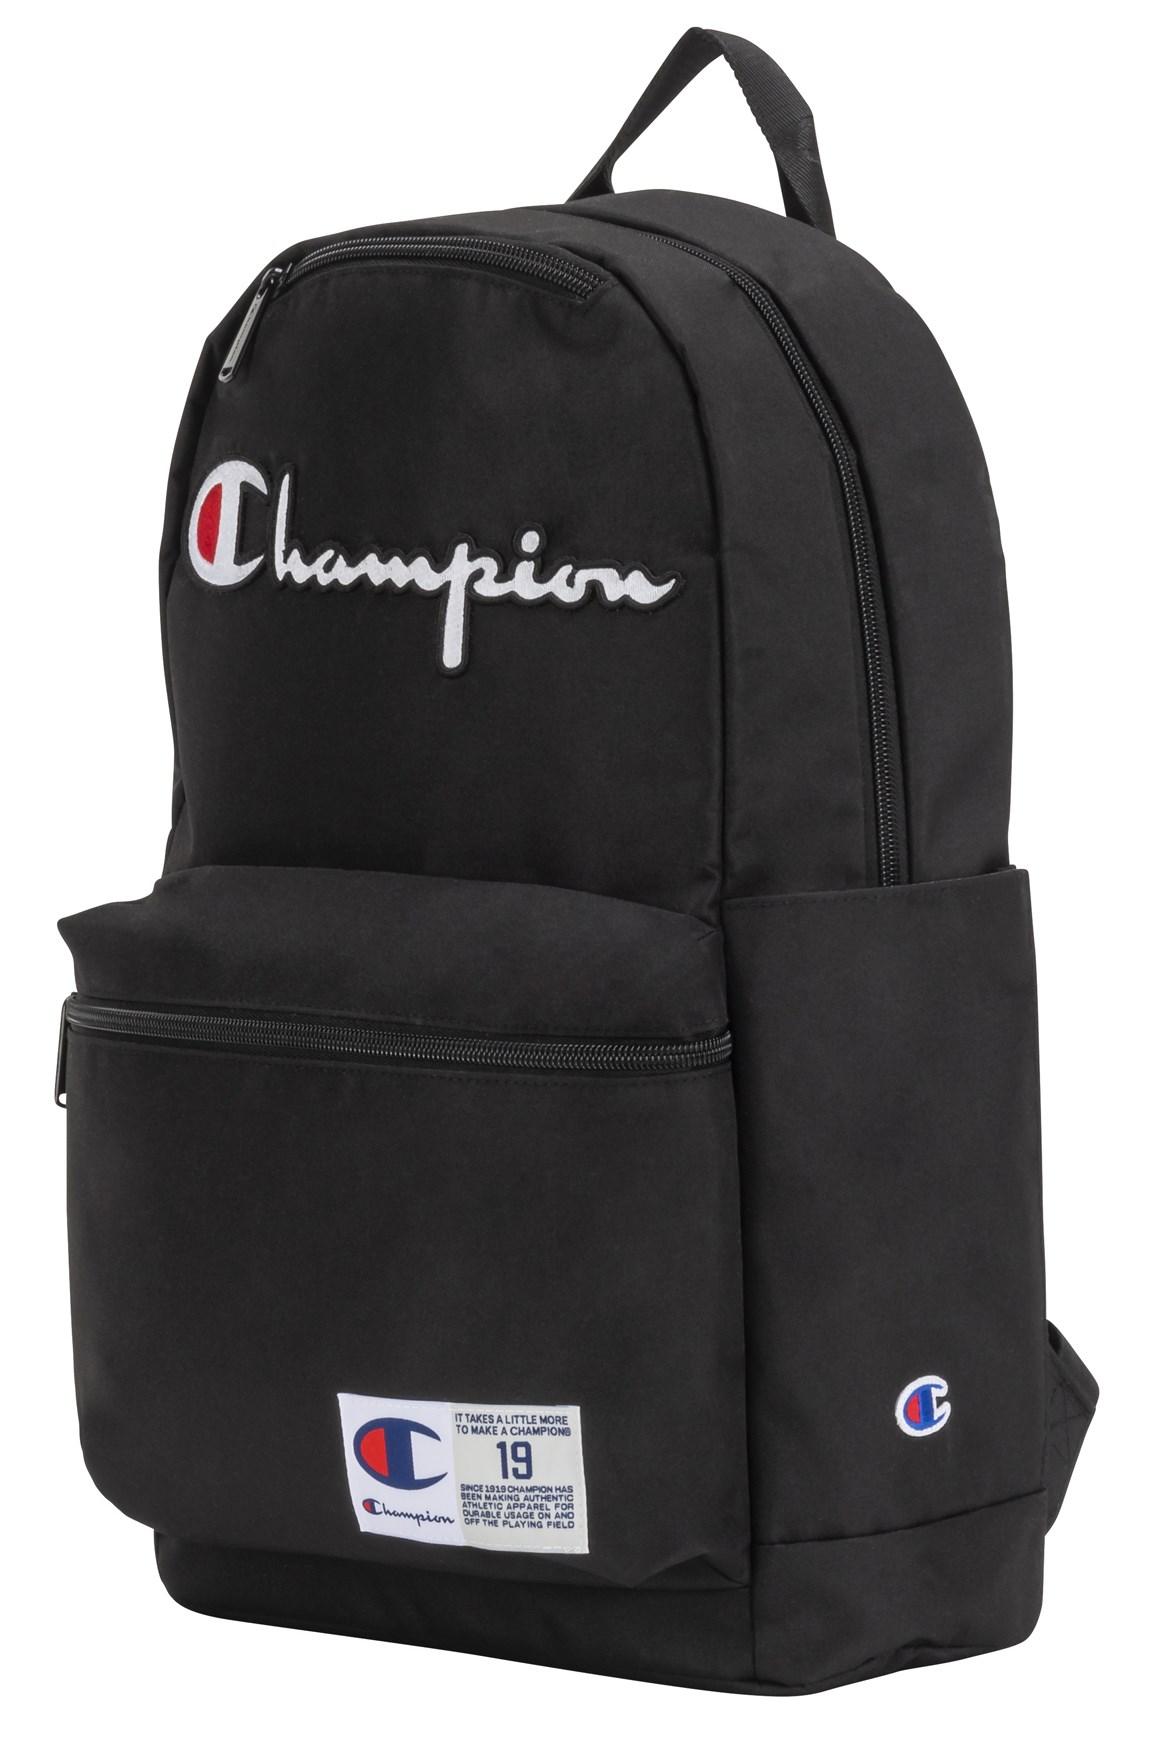  Champion Backpack - Supercize 3.0